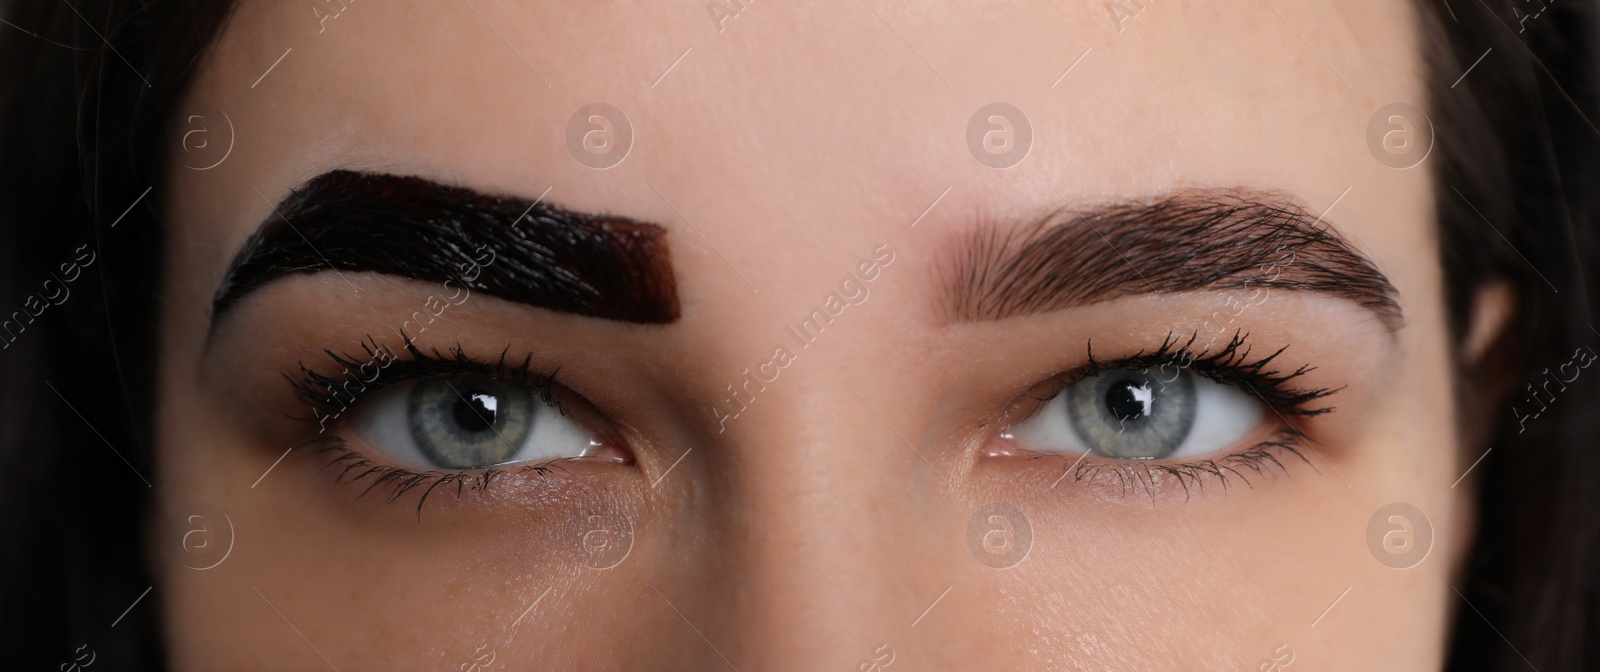 Photo of Woman during eyebrow tinting procedure, closeup view